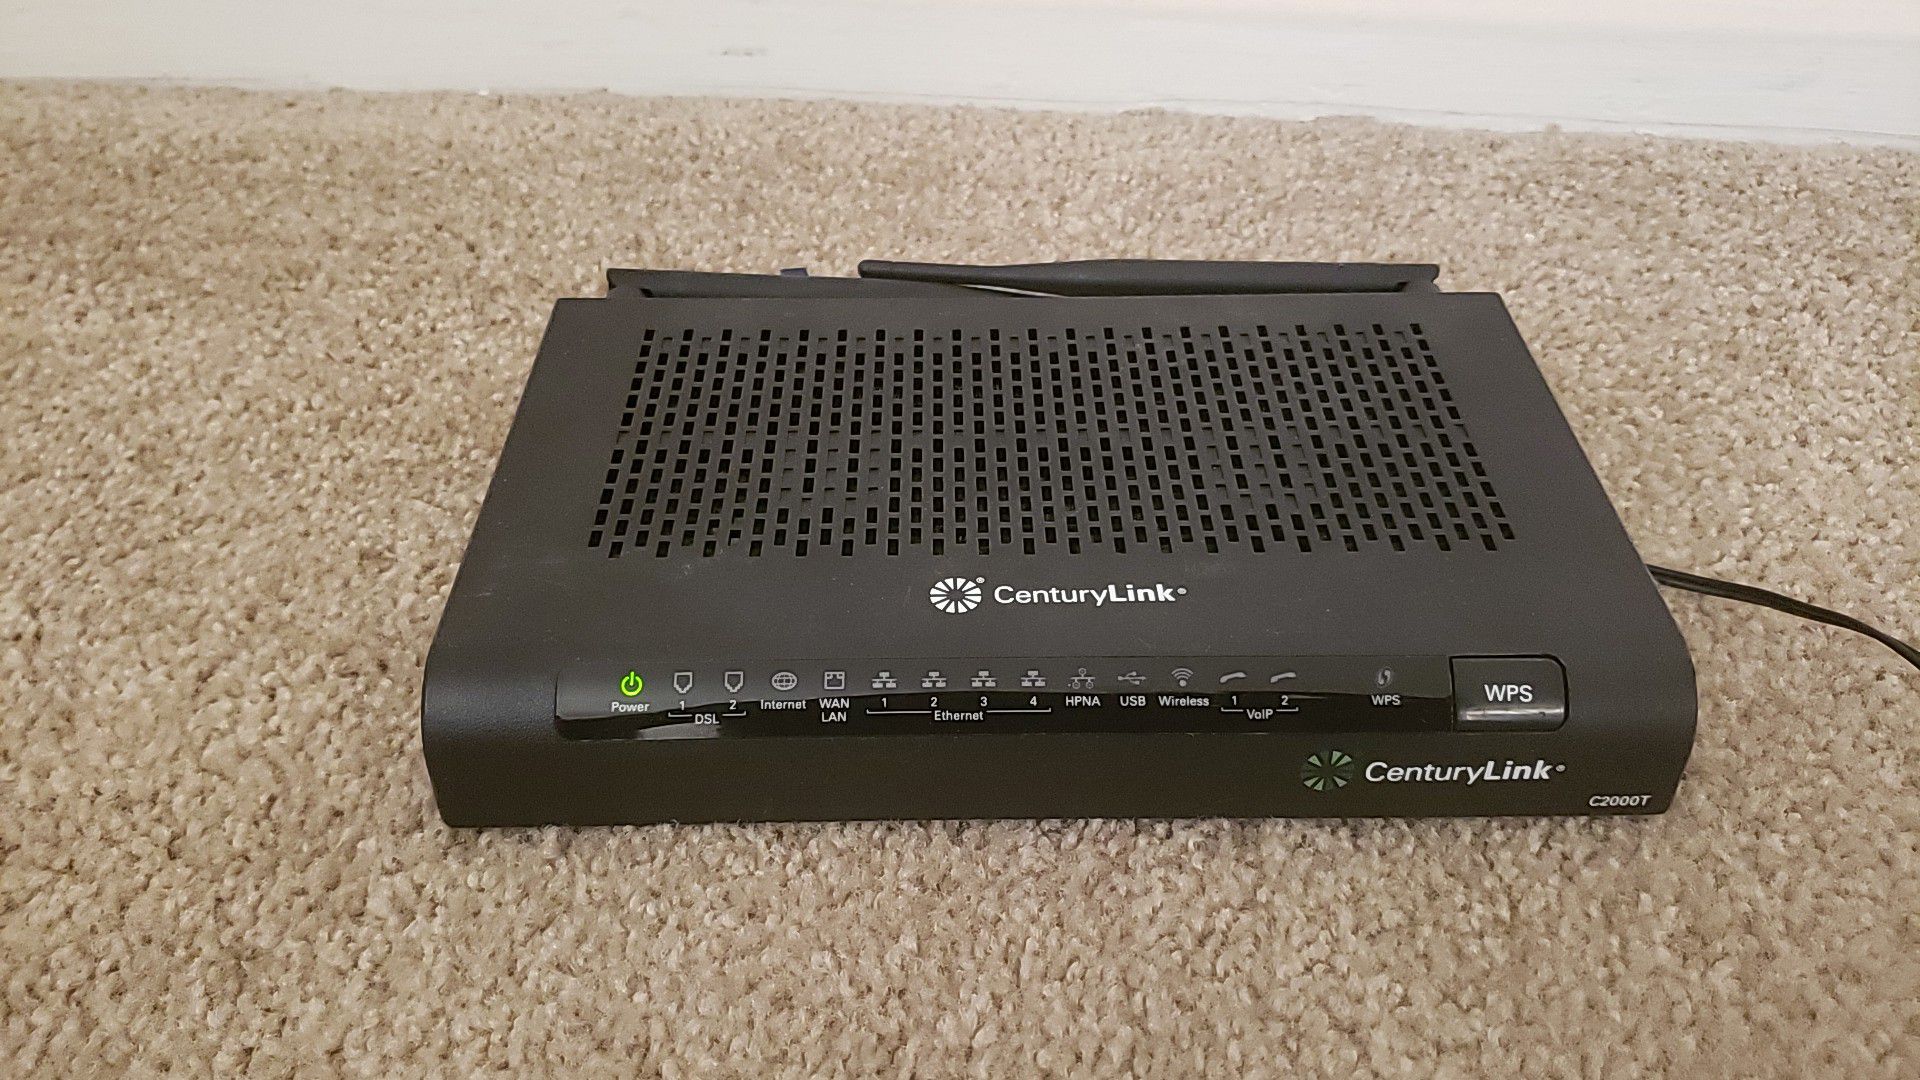 CenturyLink C2000T Modem with router